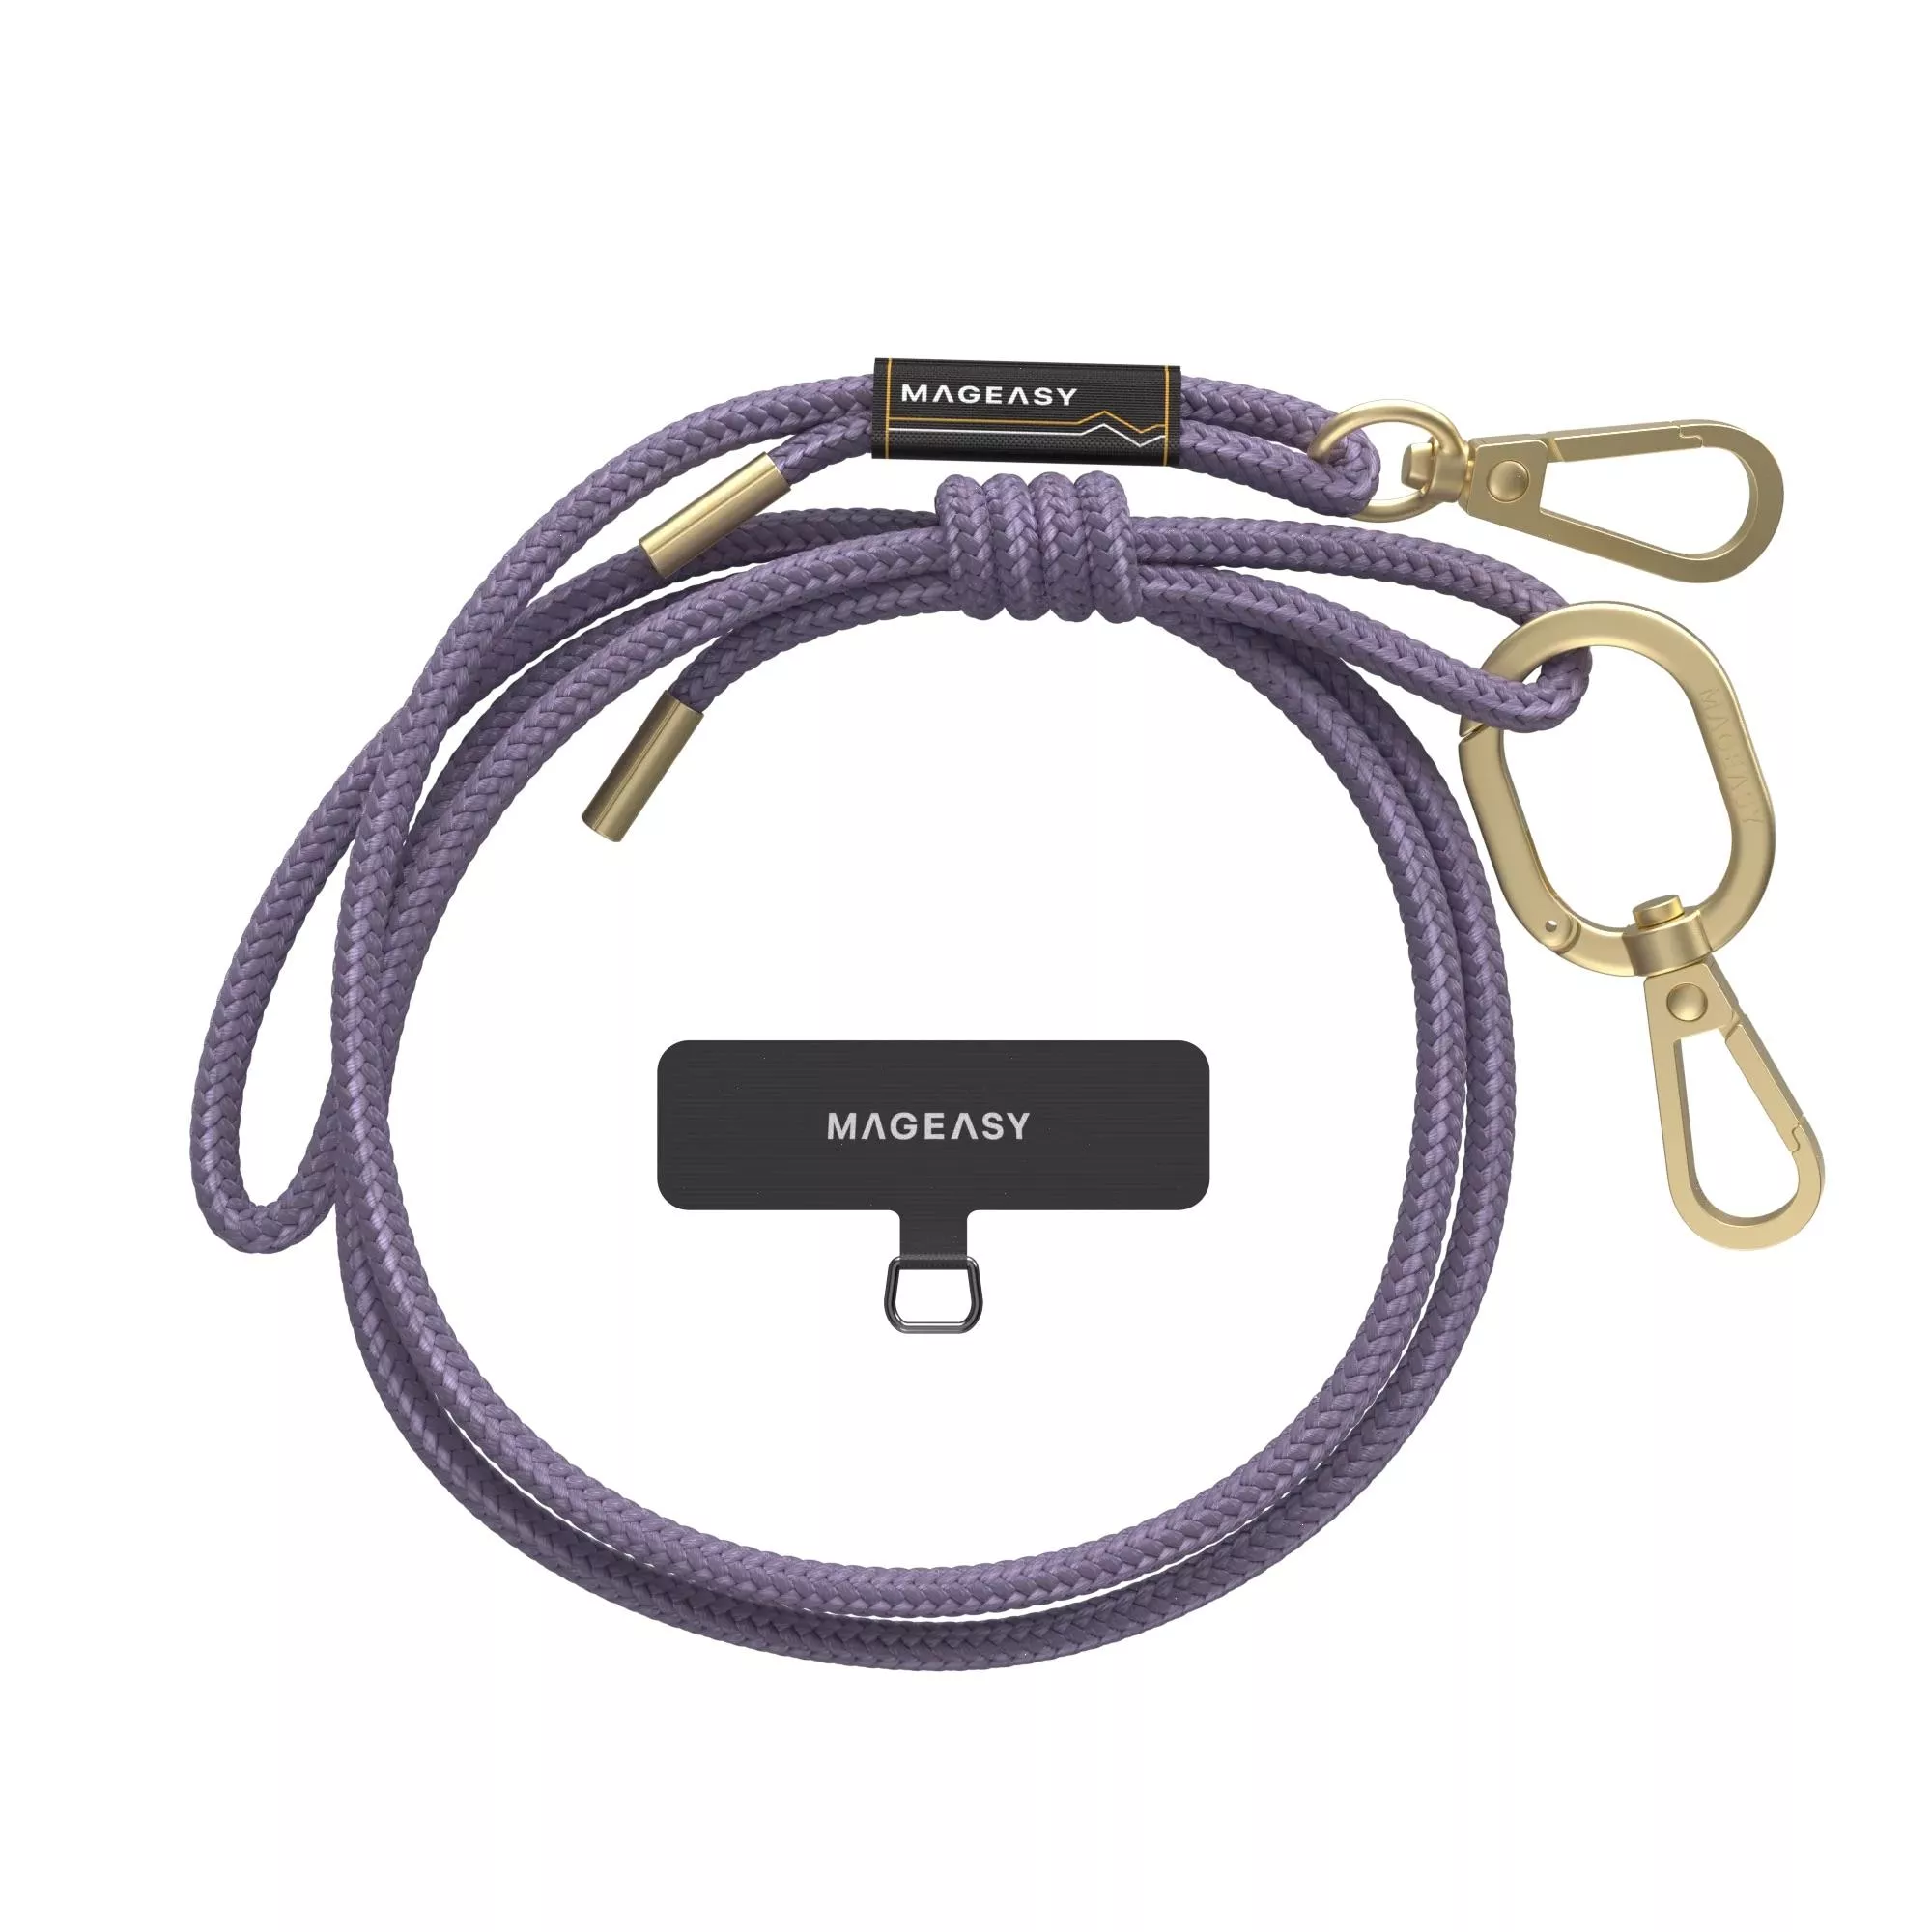 6 mm STRAP 掛繩/掛繩片組 (相容 iOS / Android 手機殼) 謎樣紫